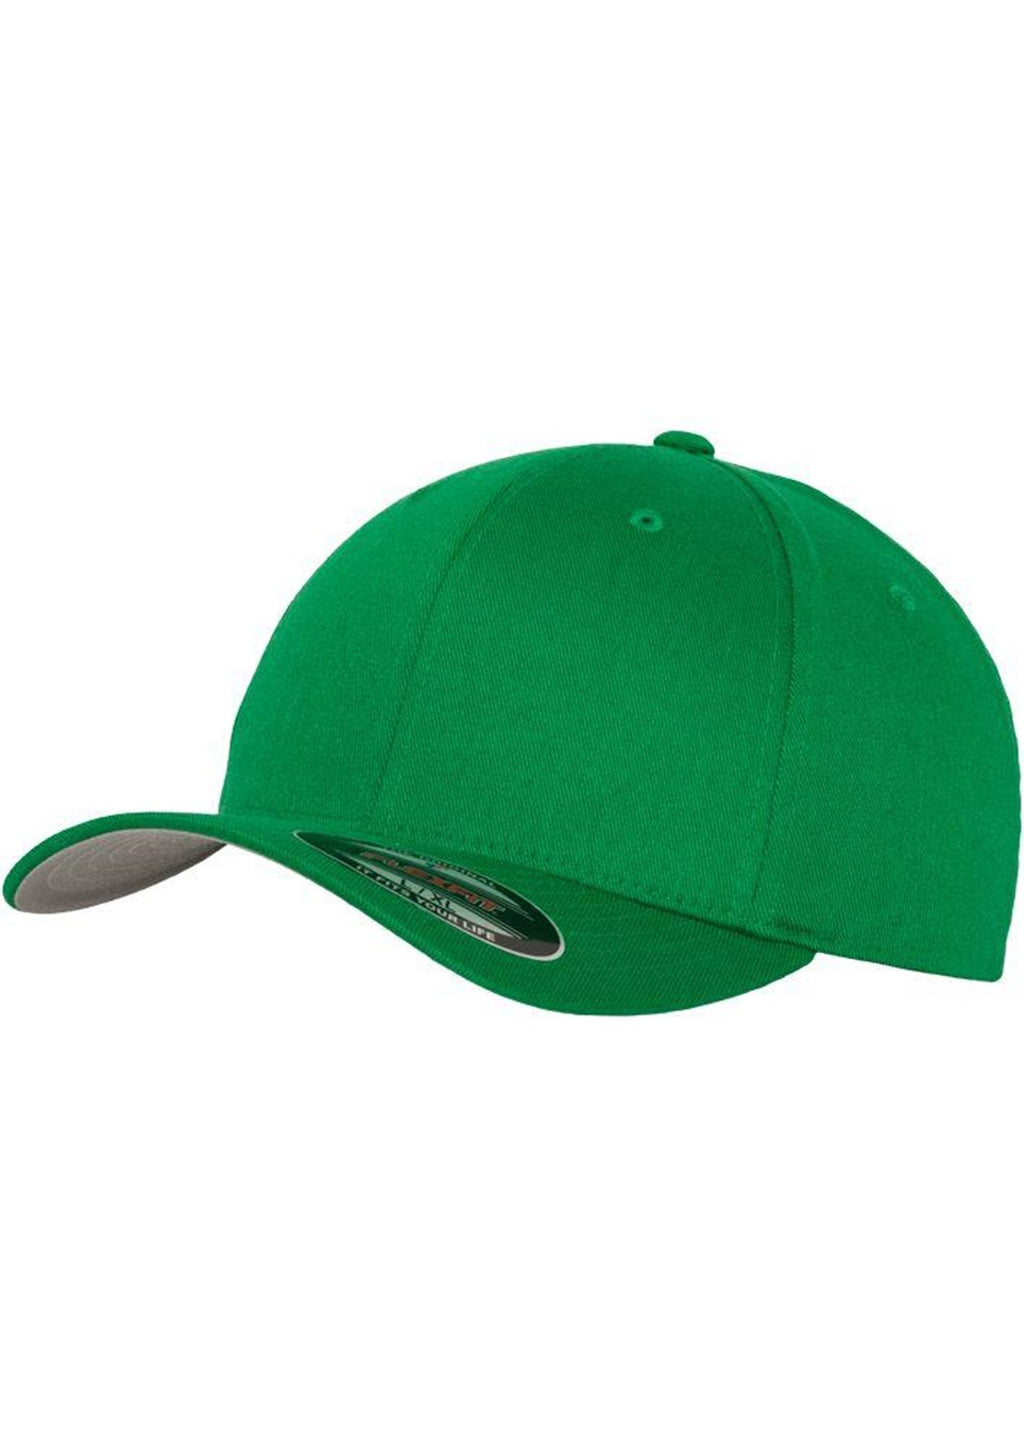 FlexFit原始棒球帽 - 绿色